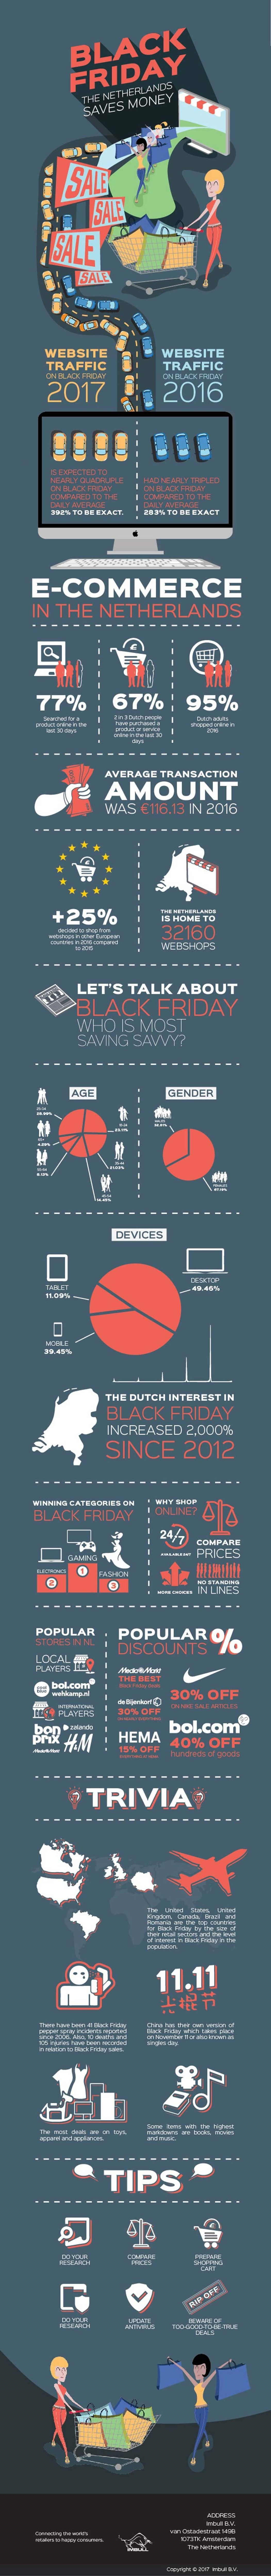 Infographic - Black Friday Nederland 2017 cijfers en data